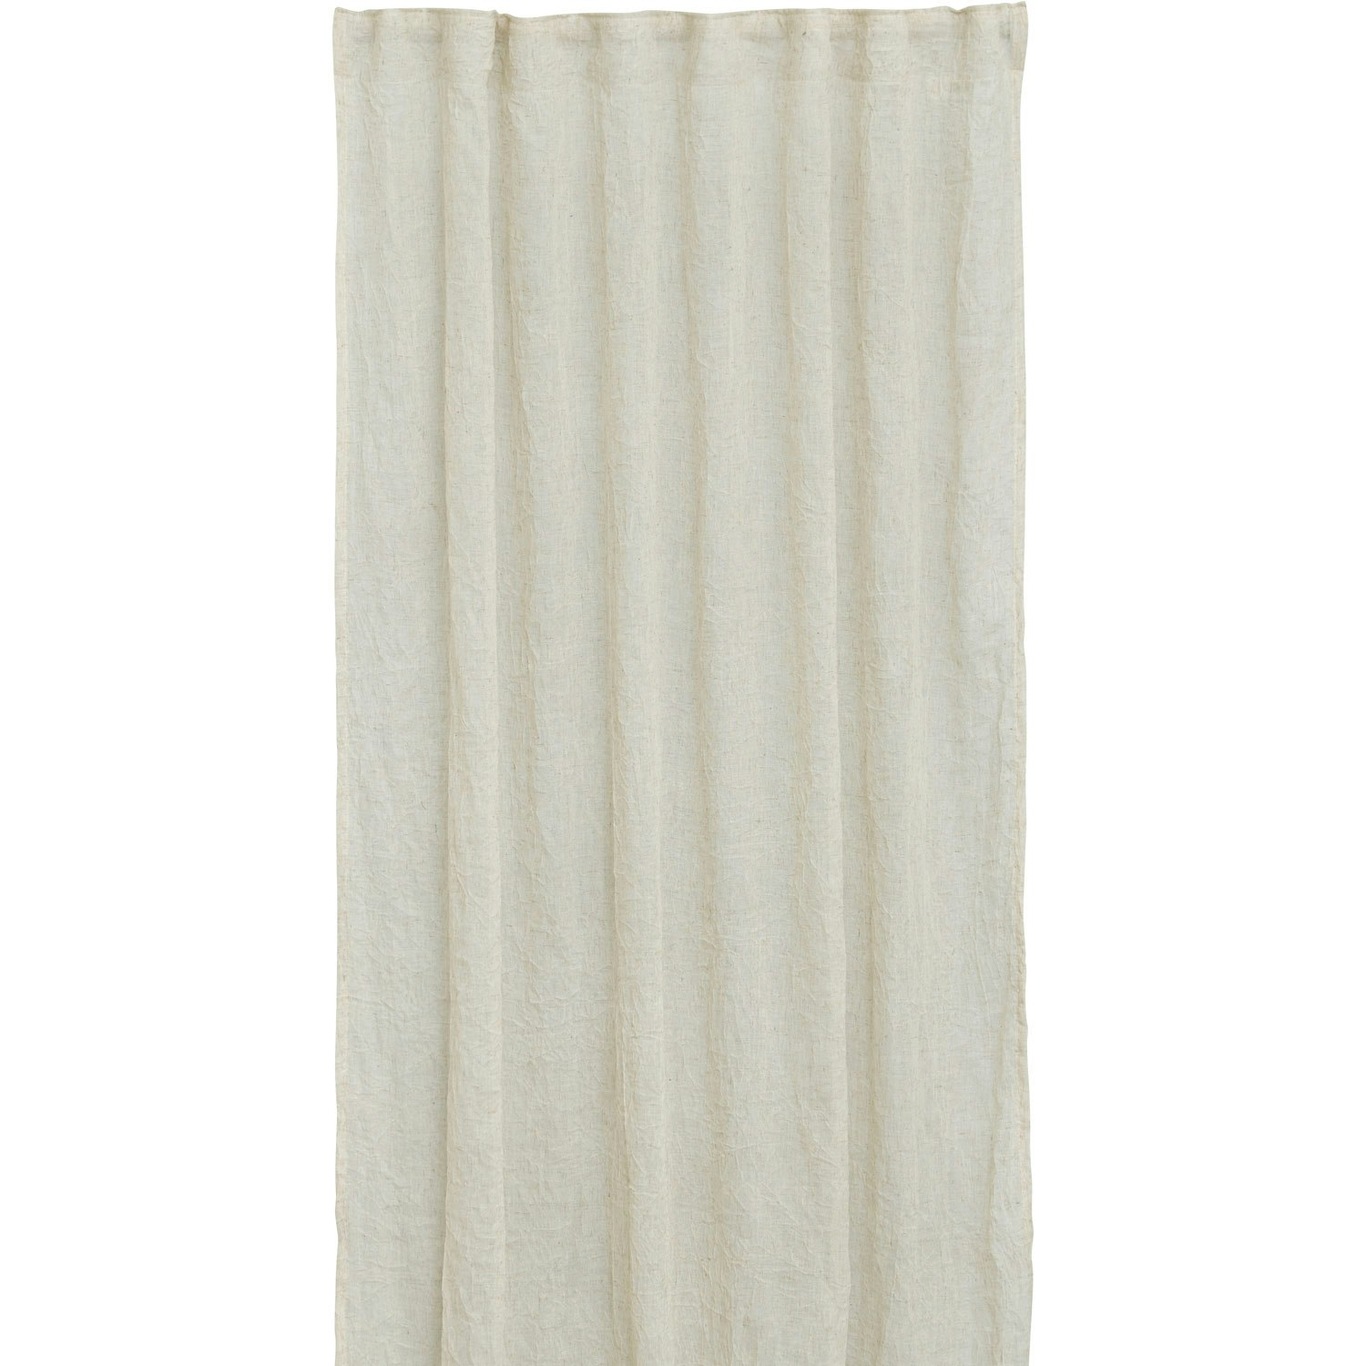 Mirja Curtain 130x275 cm 2-pack, Off-white